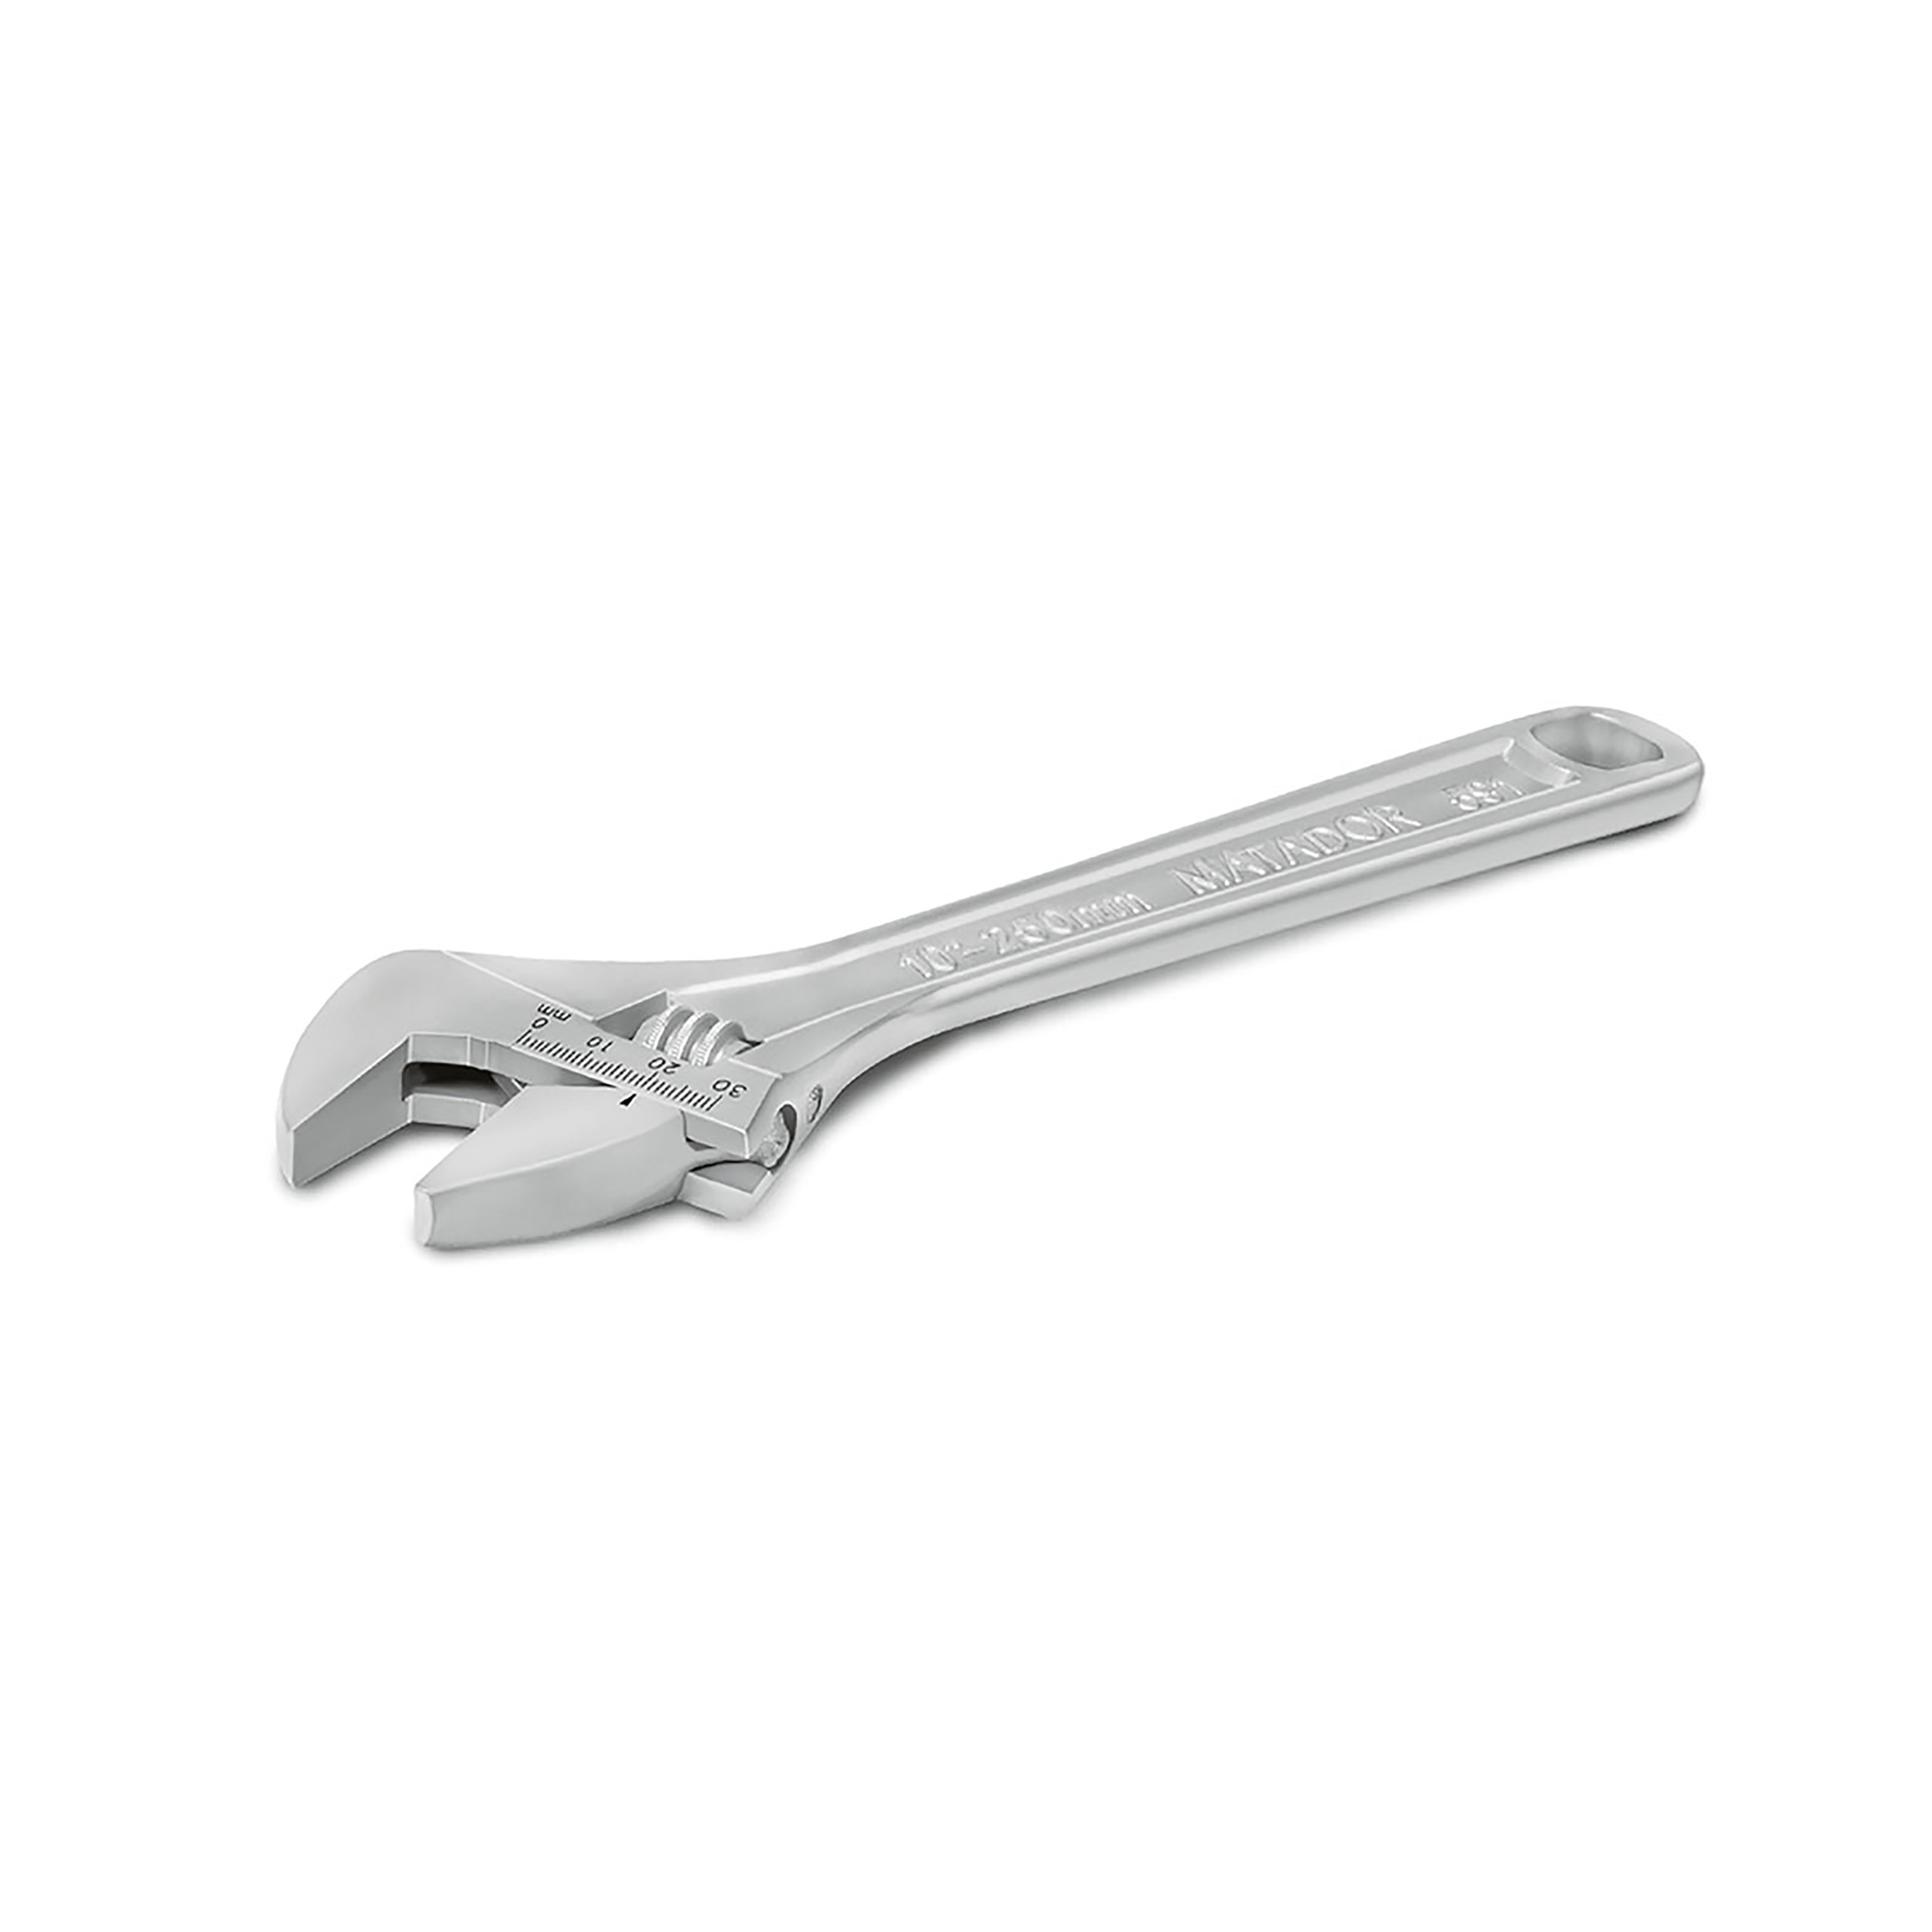 Adjustable open-end spanner, 0-13 mm, 4" / 100 mm, MATADOR 05910040